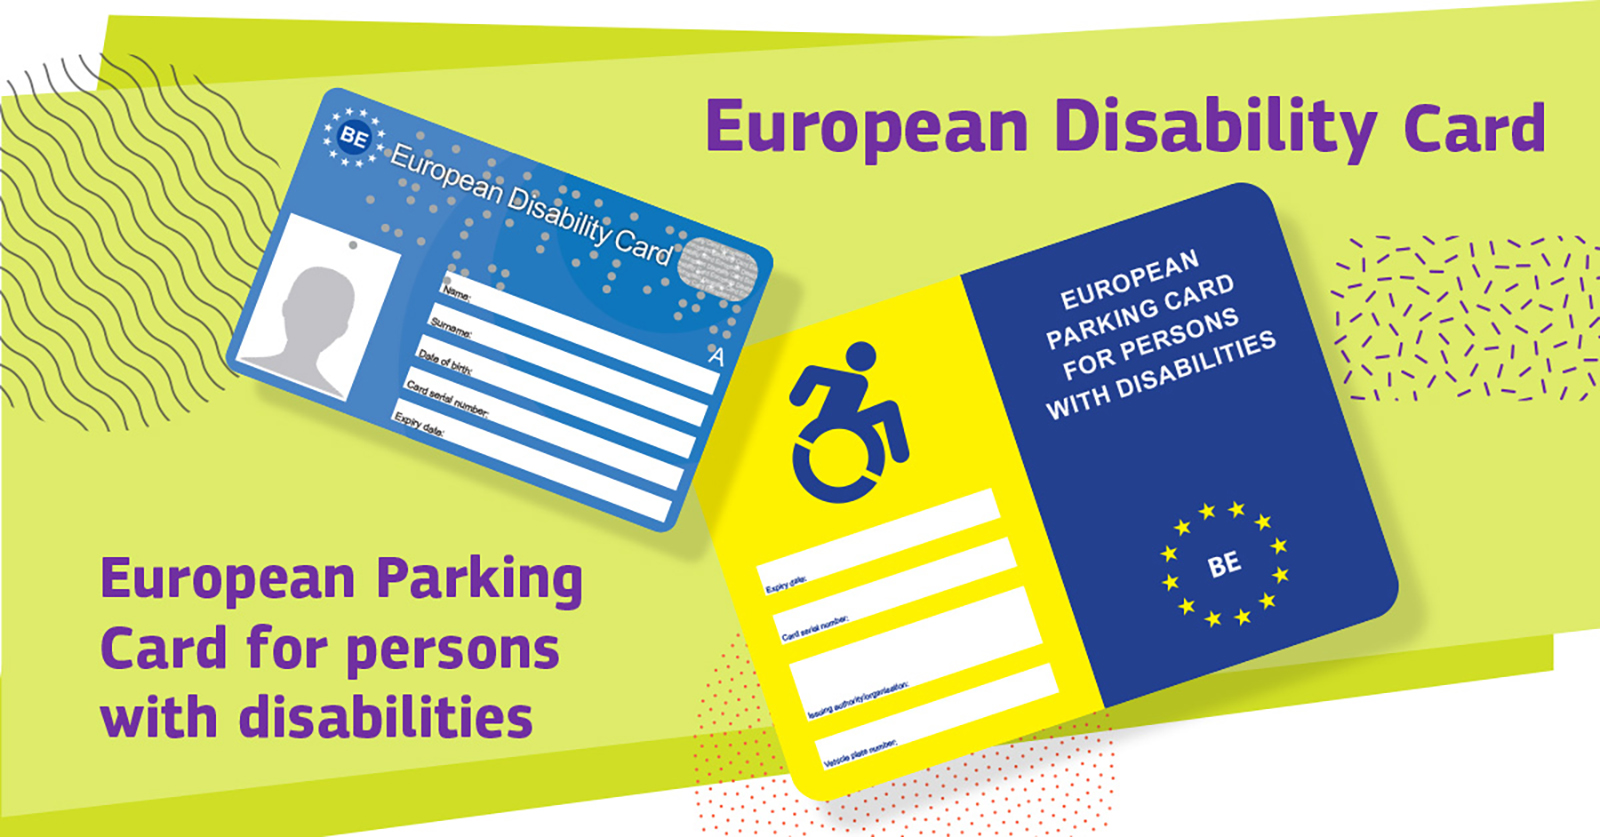 Targeta europea de la Discapacitat